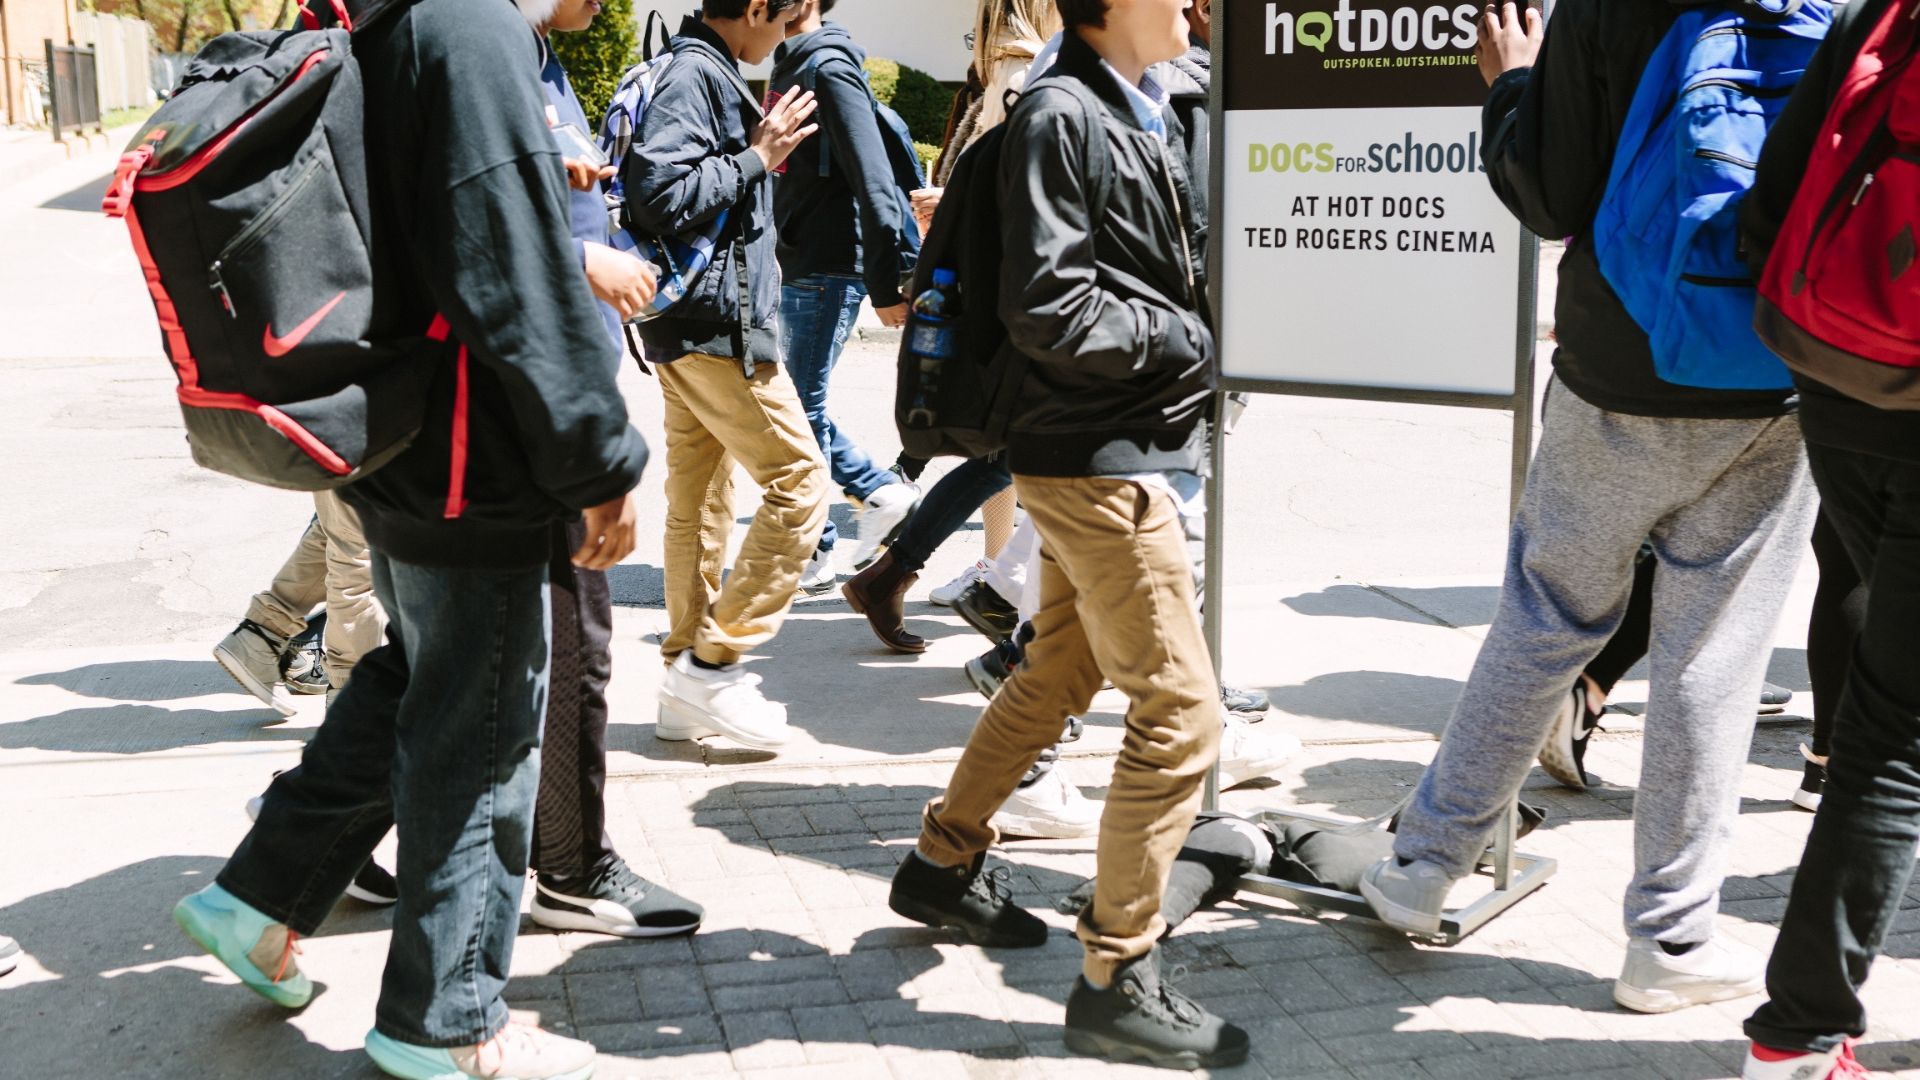 School age children in streetwear walking past a Docs for Schools outdoor sign.